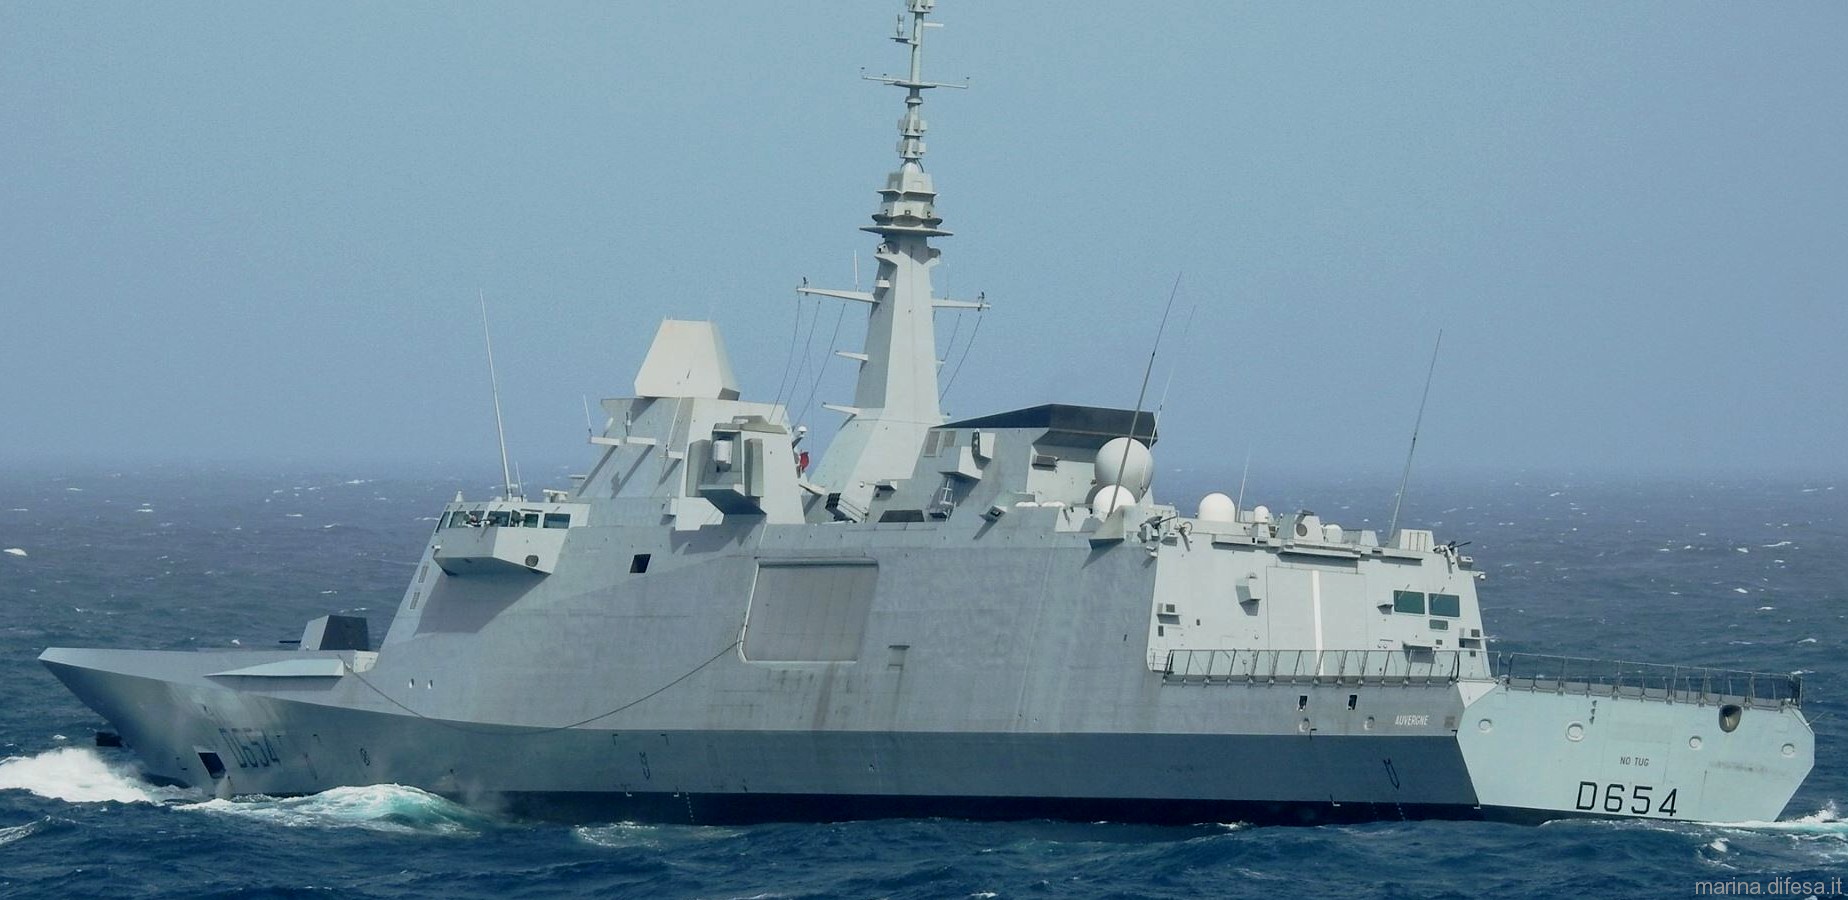 d-654 fs auvergne fremm aquitaine class frigate fregate multi purpose french navy marine nationale 11